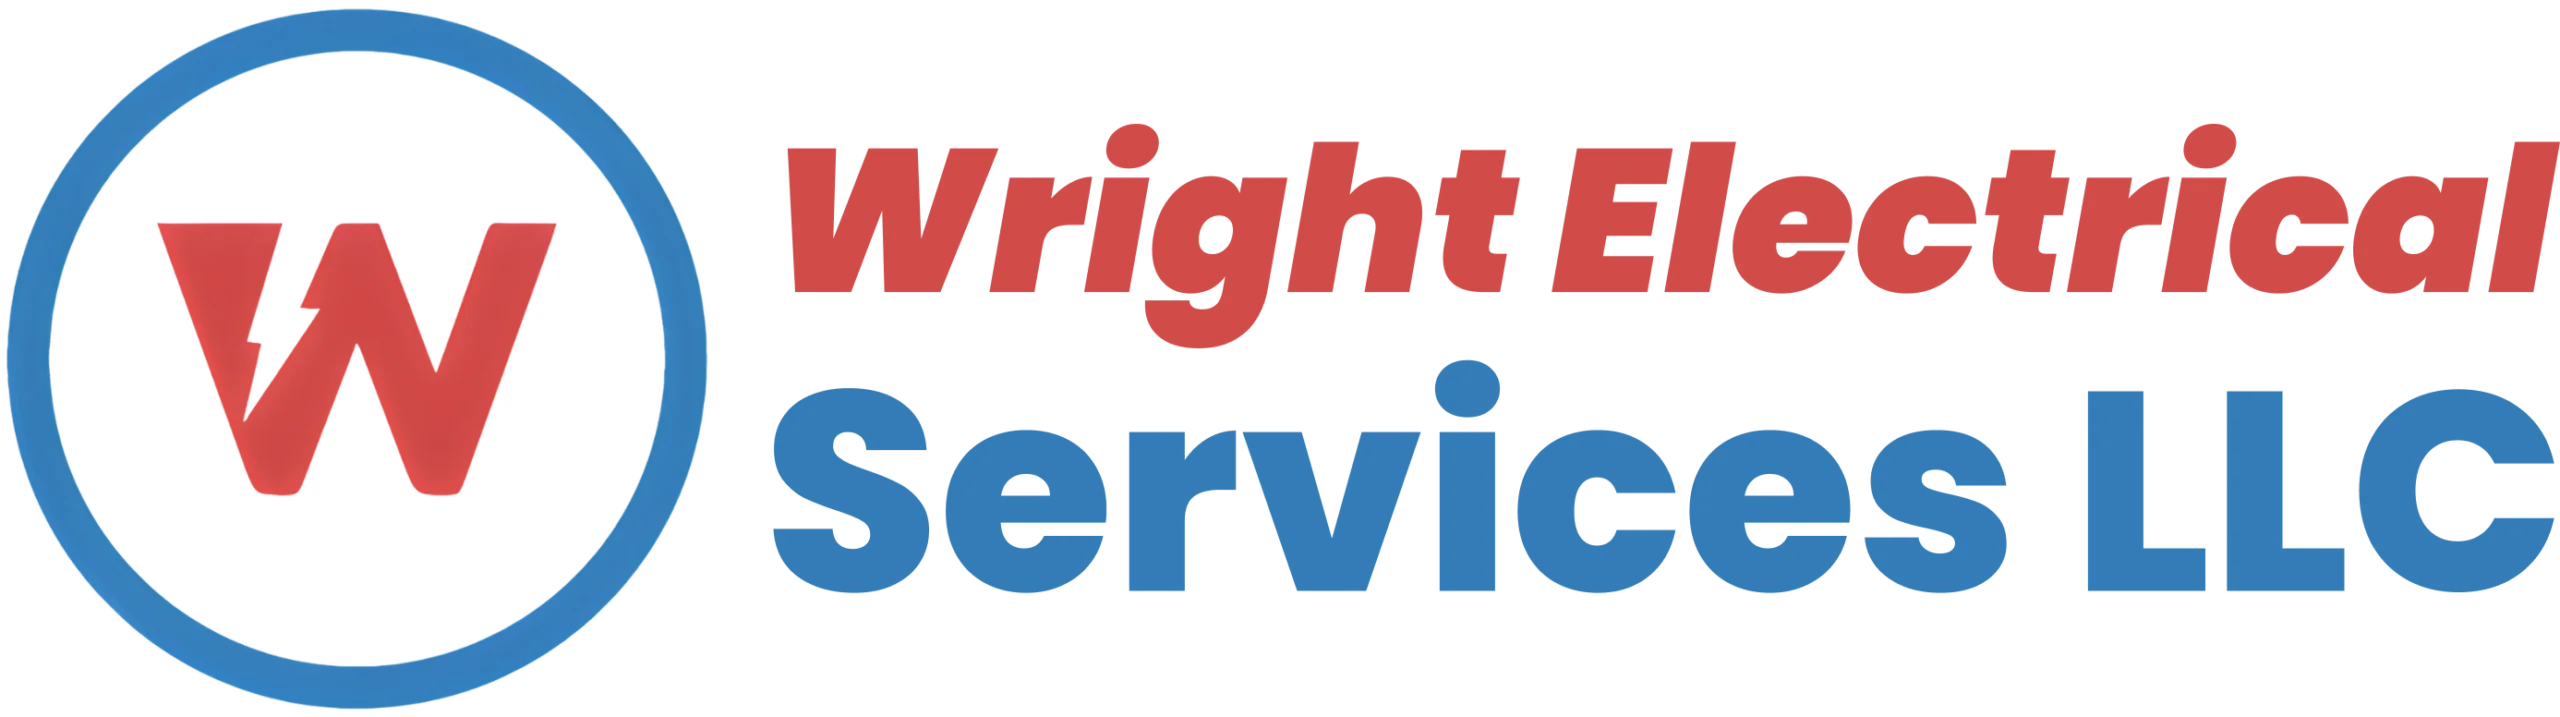 wright electrical logo